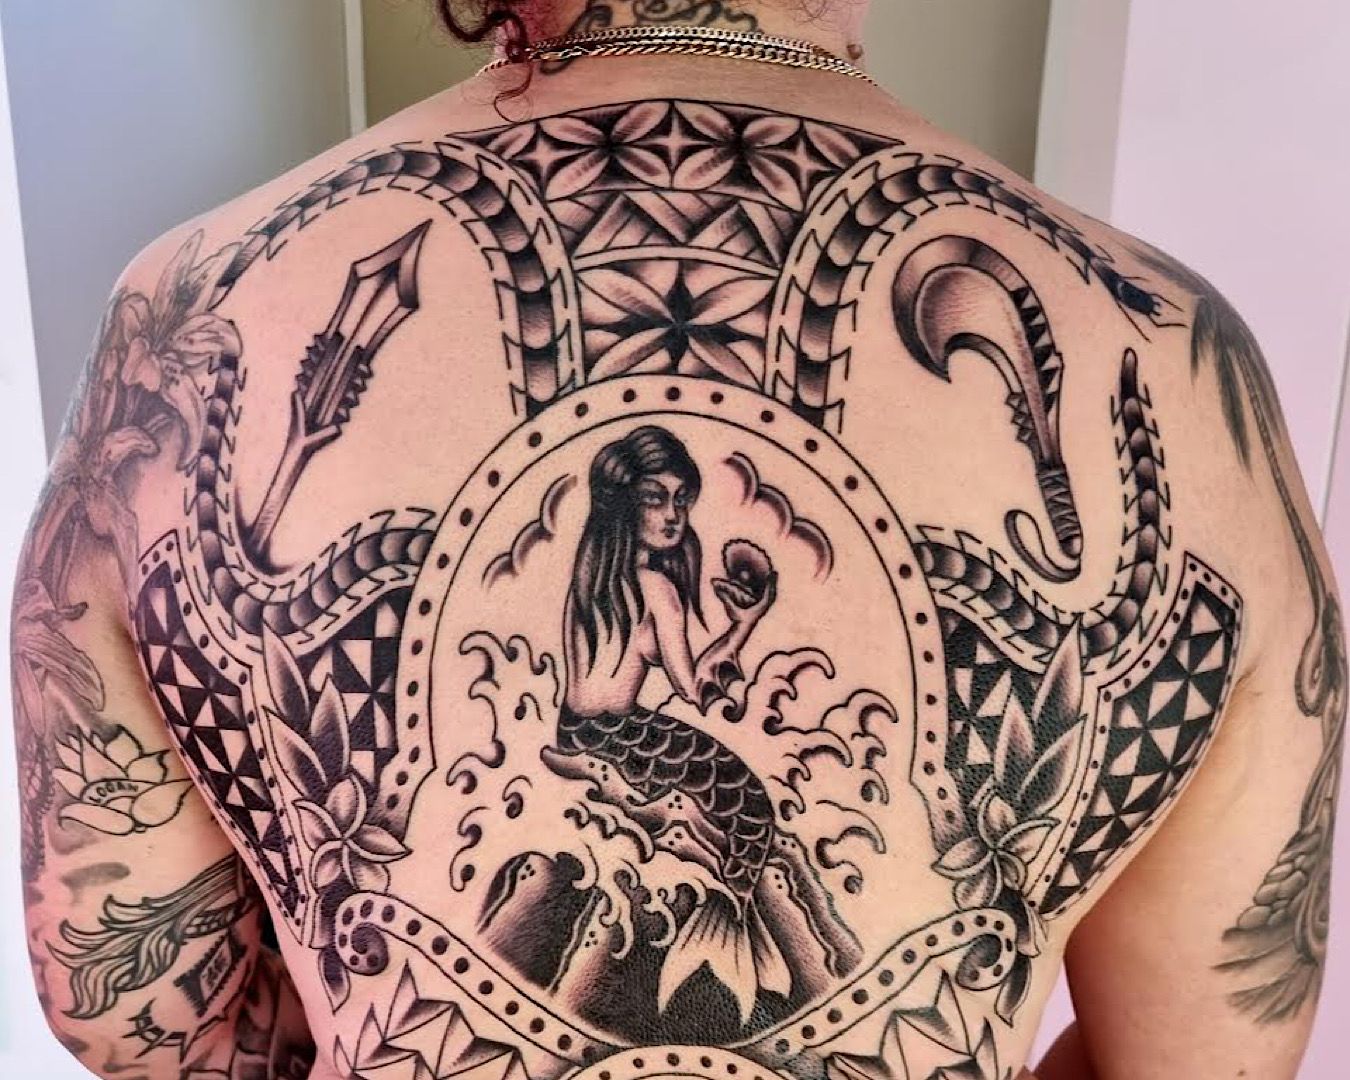 My stunning mermaid skeleton tattoo, done by Sam from Thomson's Peak Tattoo  : r/tattoo